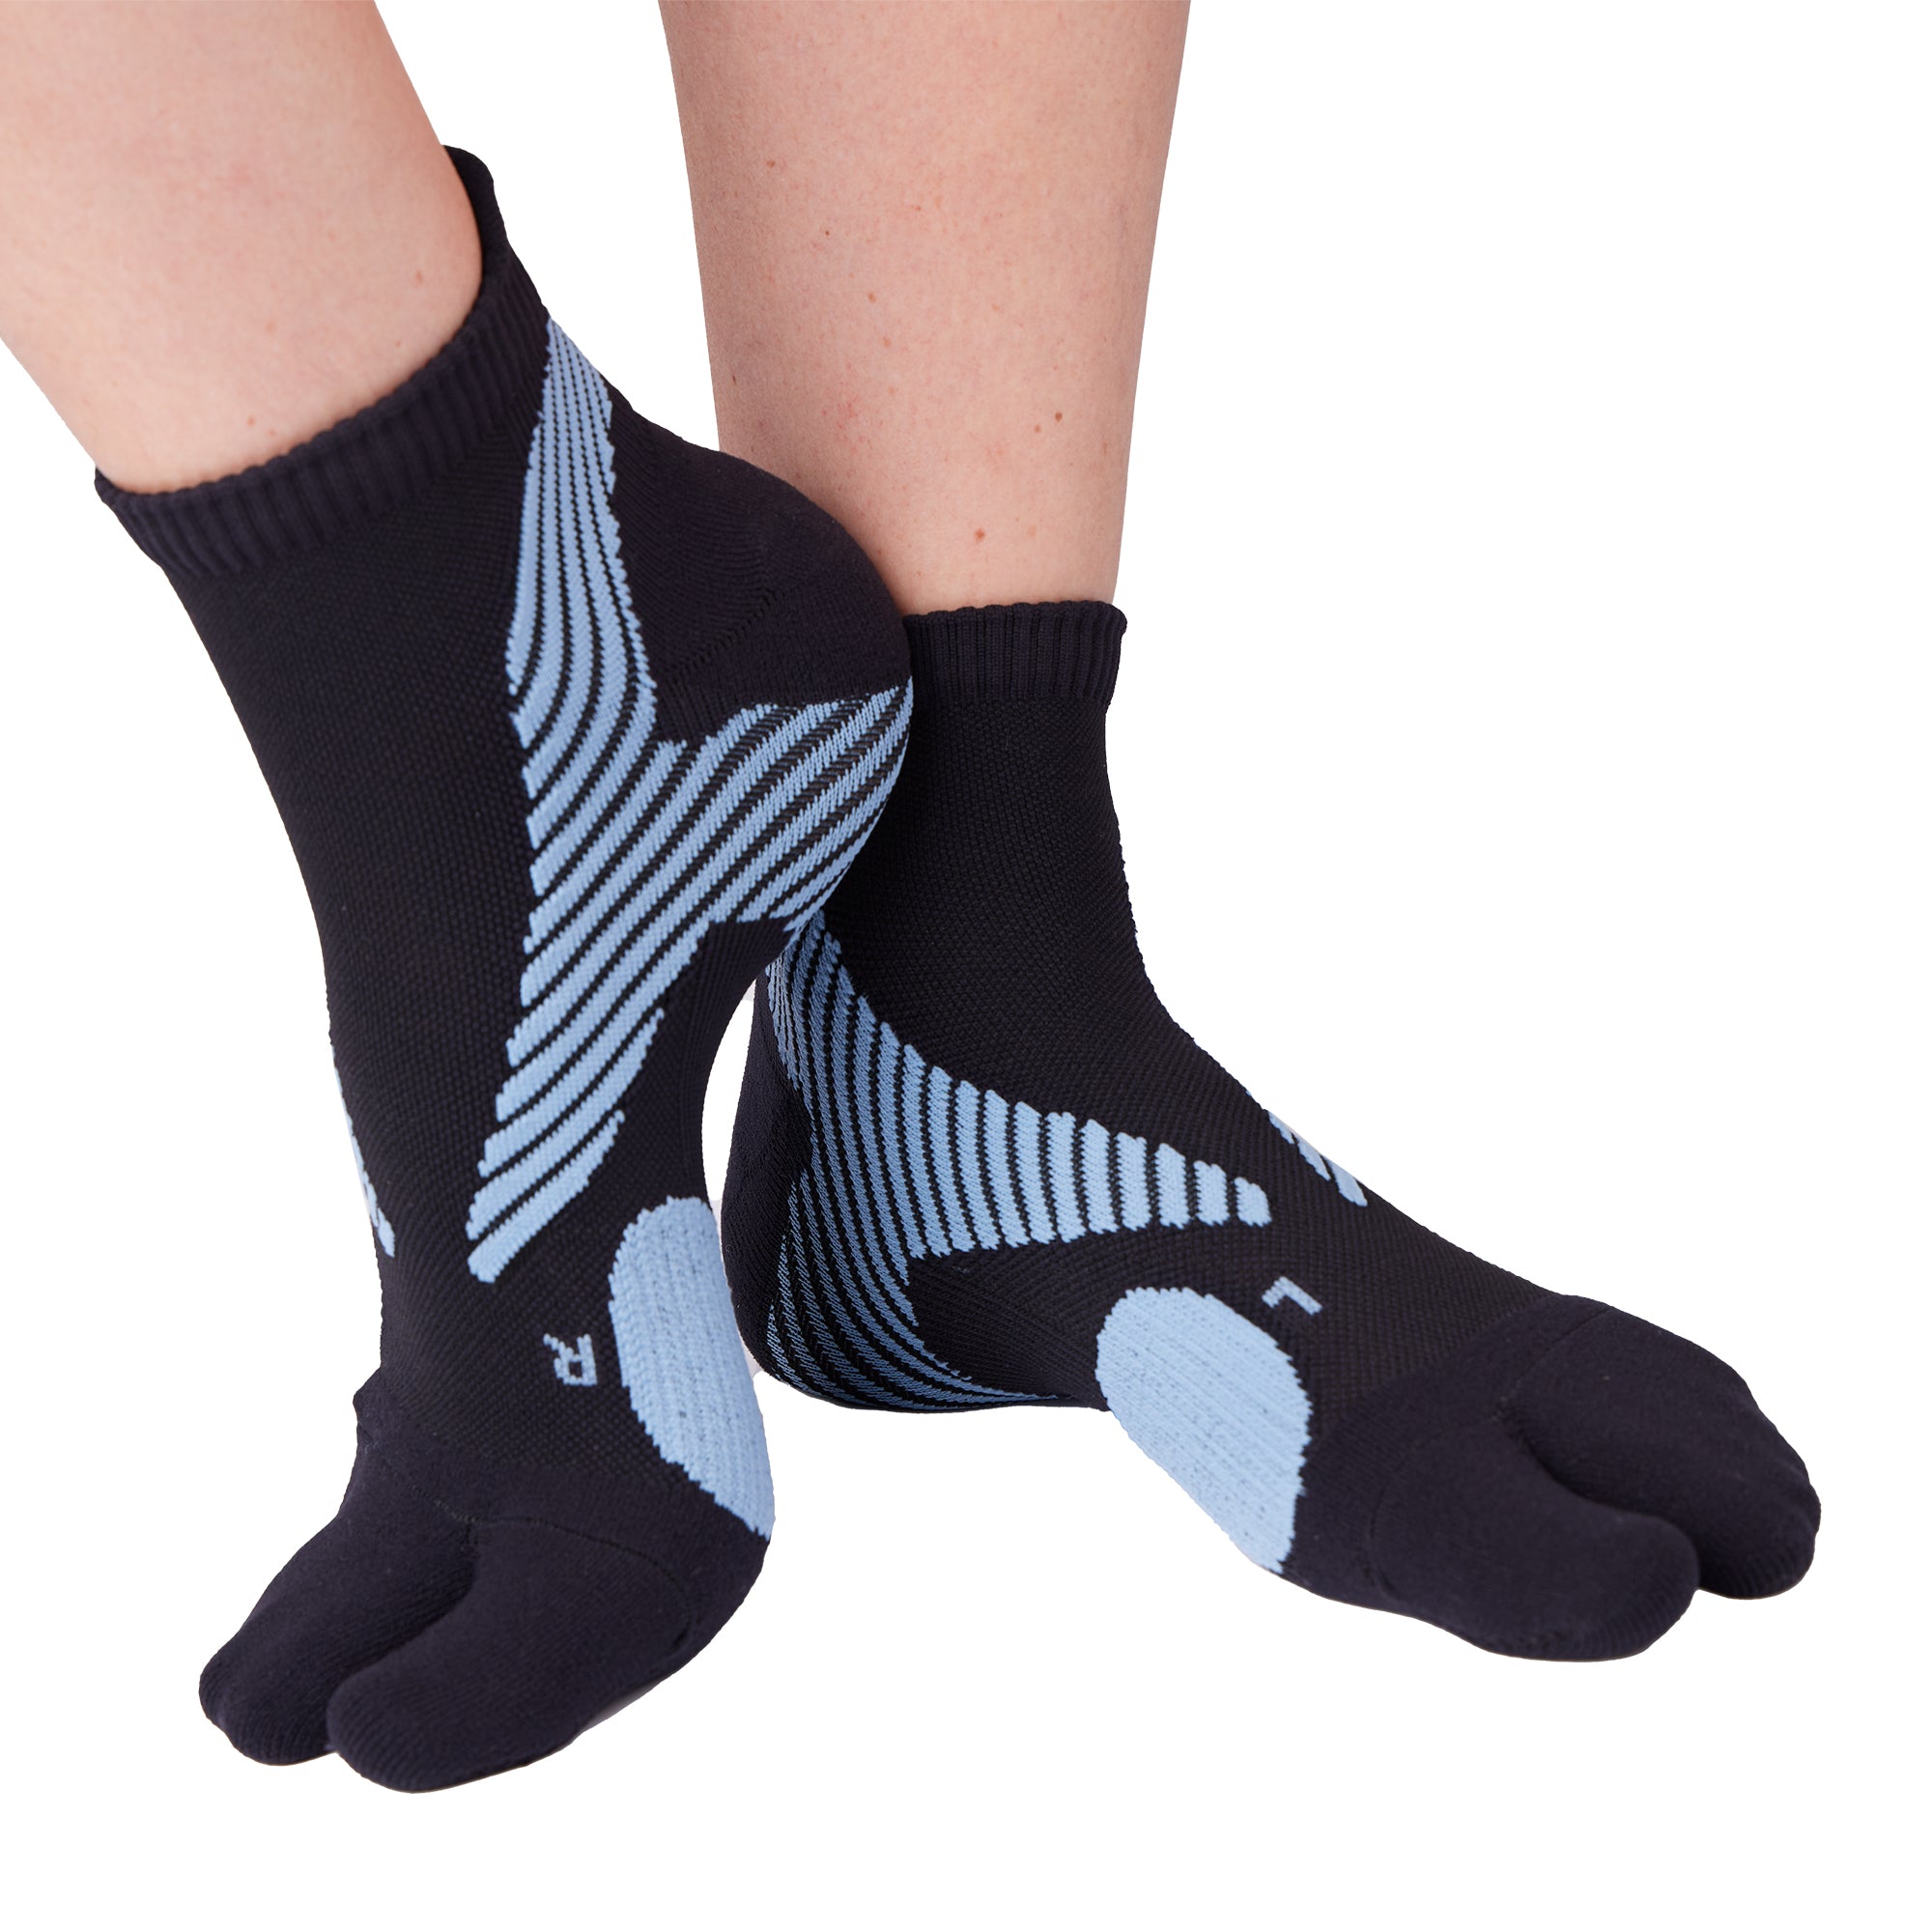 Toe Separator Socks Soft Breathable Bunion Corrector Socks for